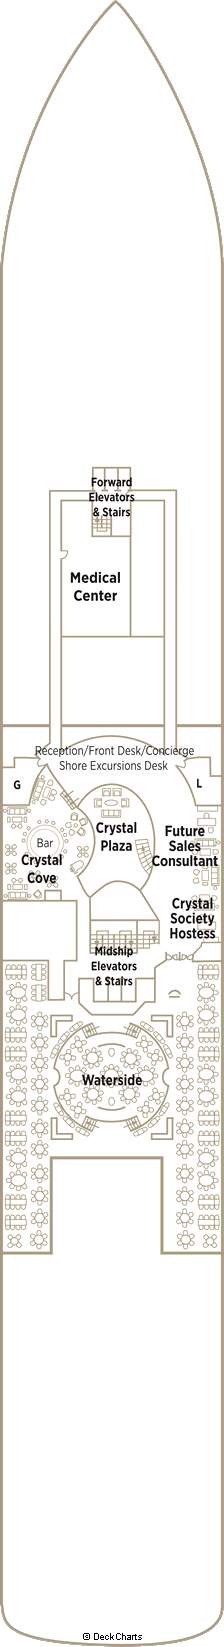 crystal serenity deck plans